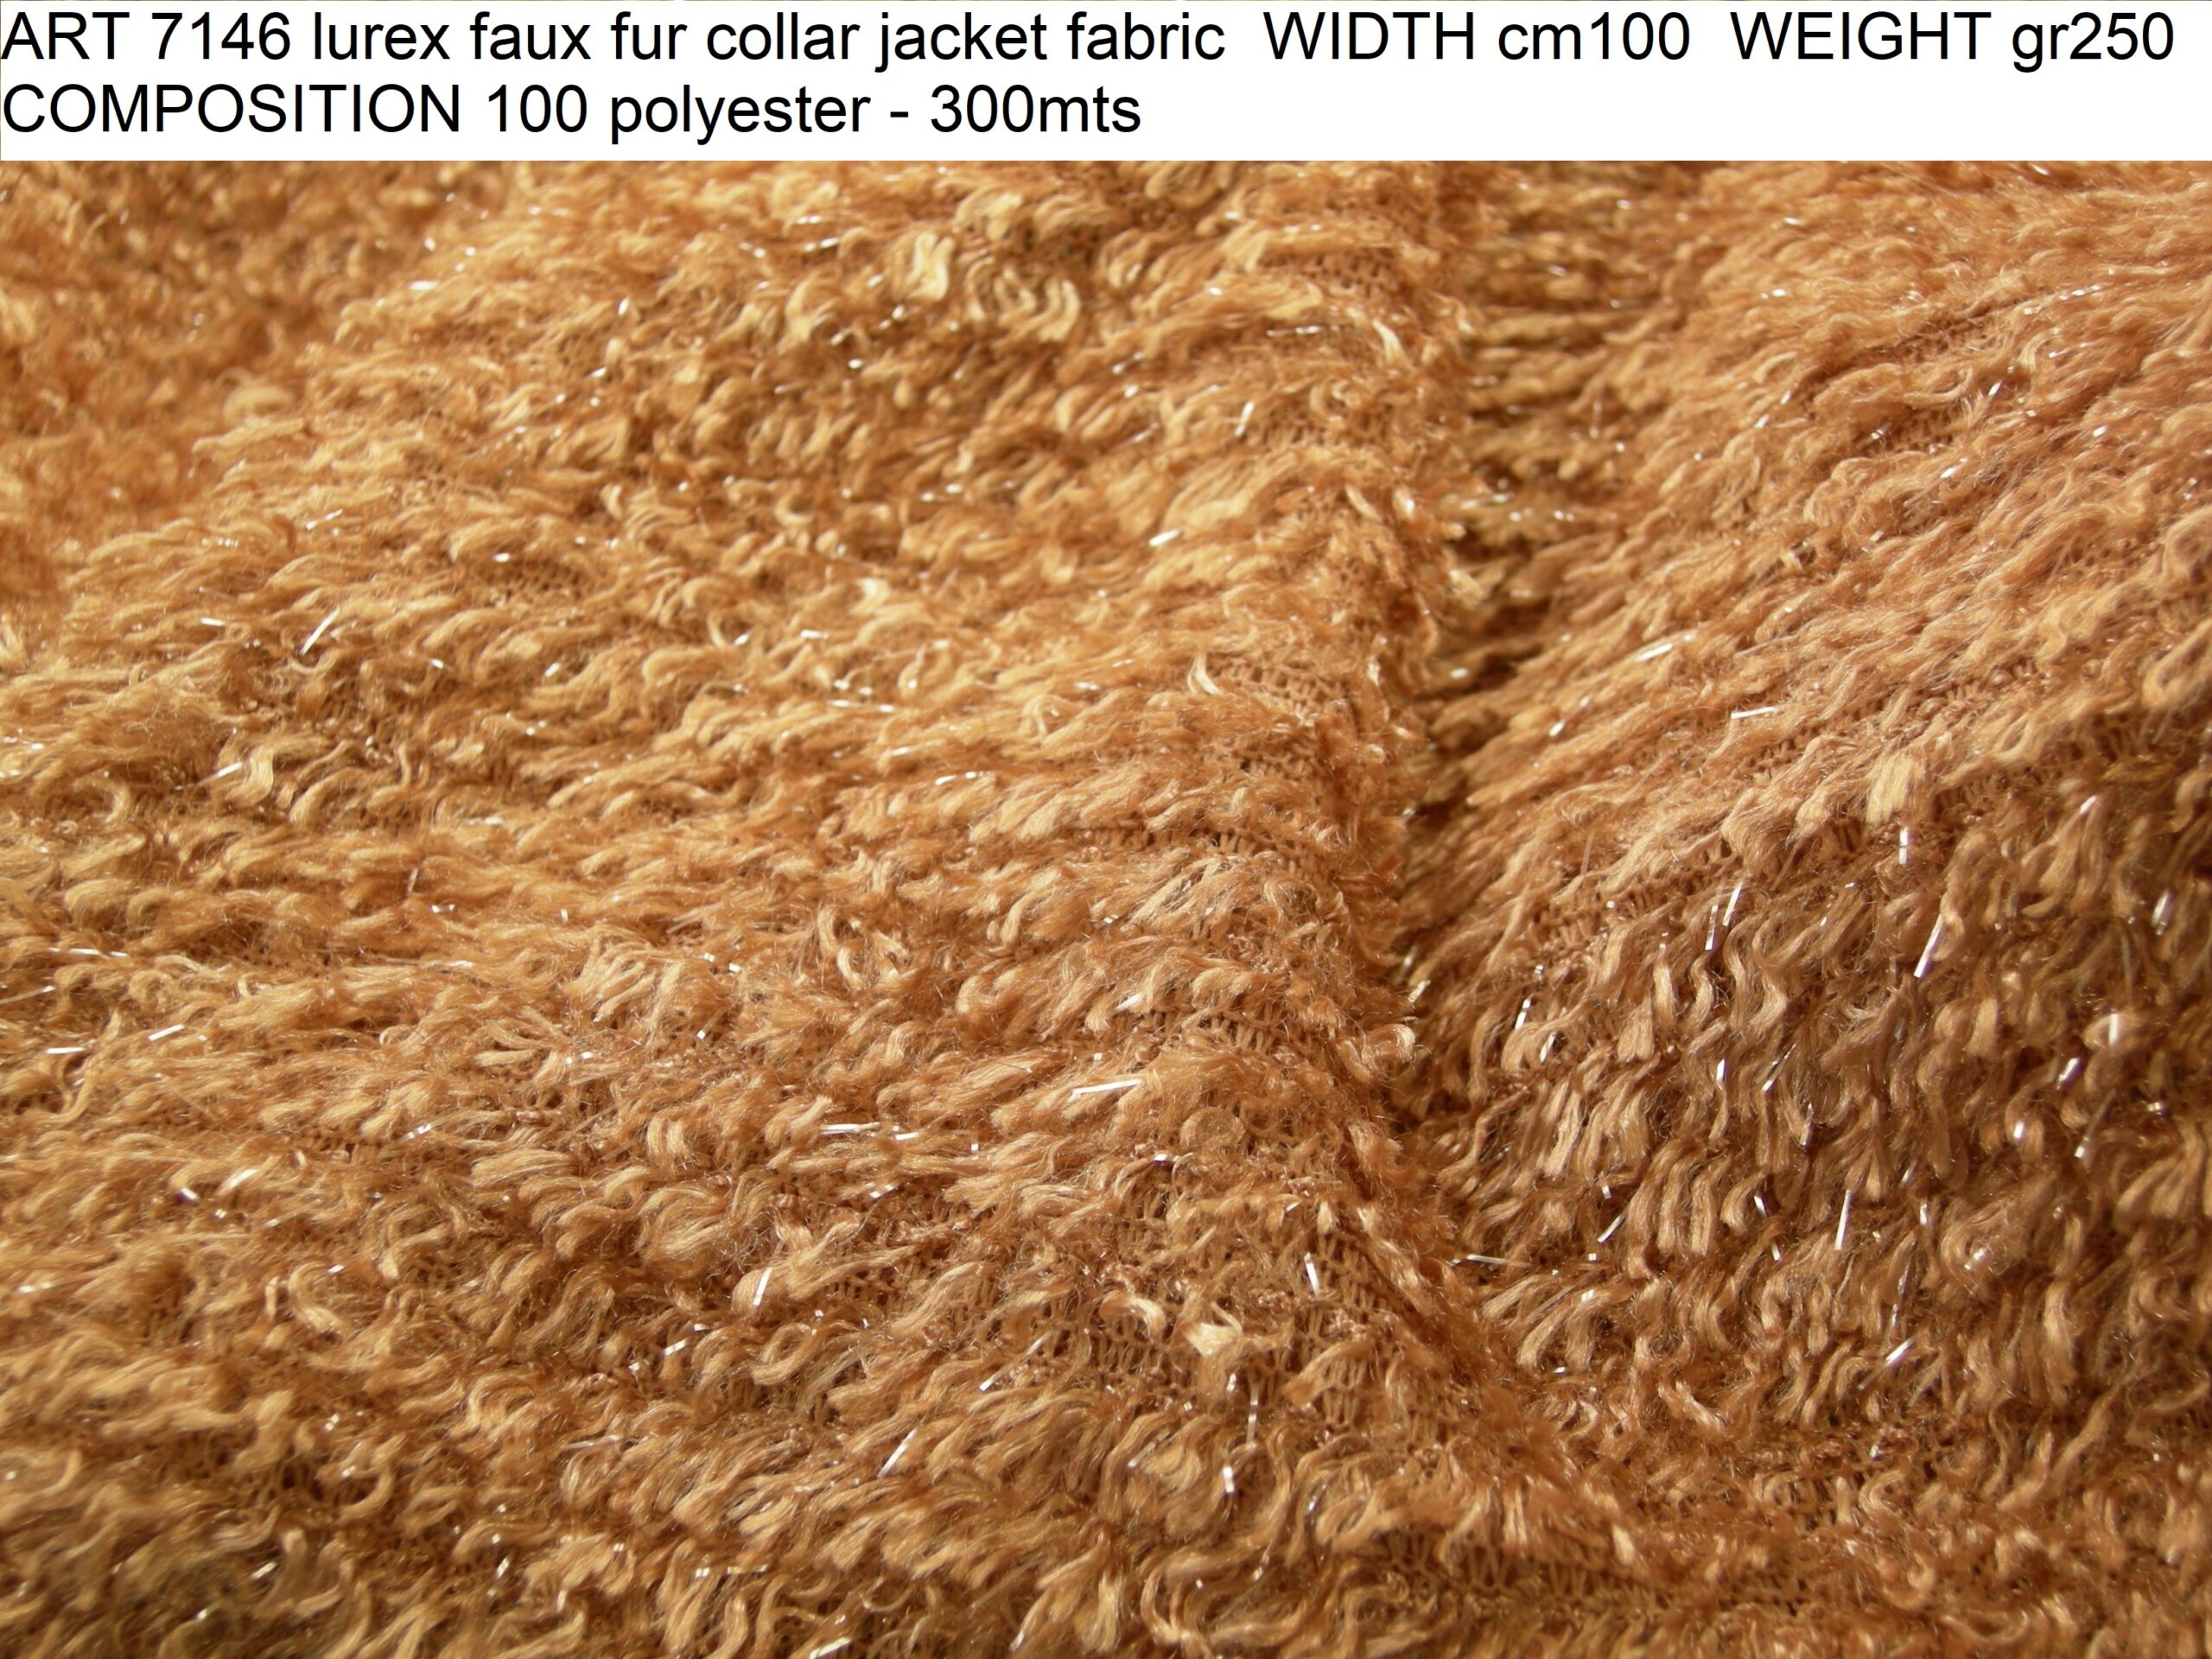 ART 7146 lurex faux fur collar jacket fabric WIDTH cm100 WEIGHT gr250 COMPOSITION 100 polyester - 300mts